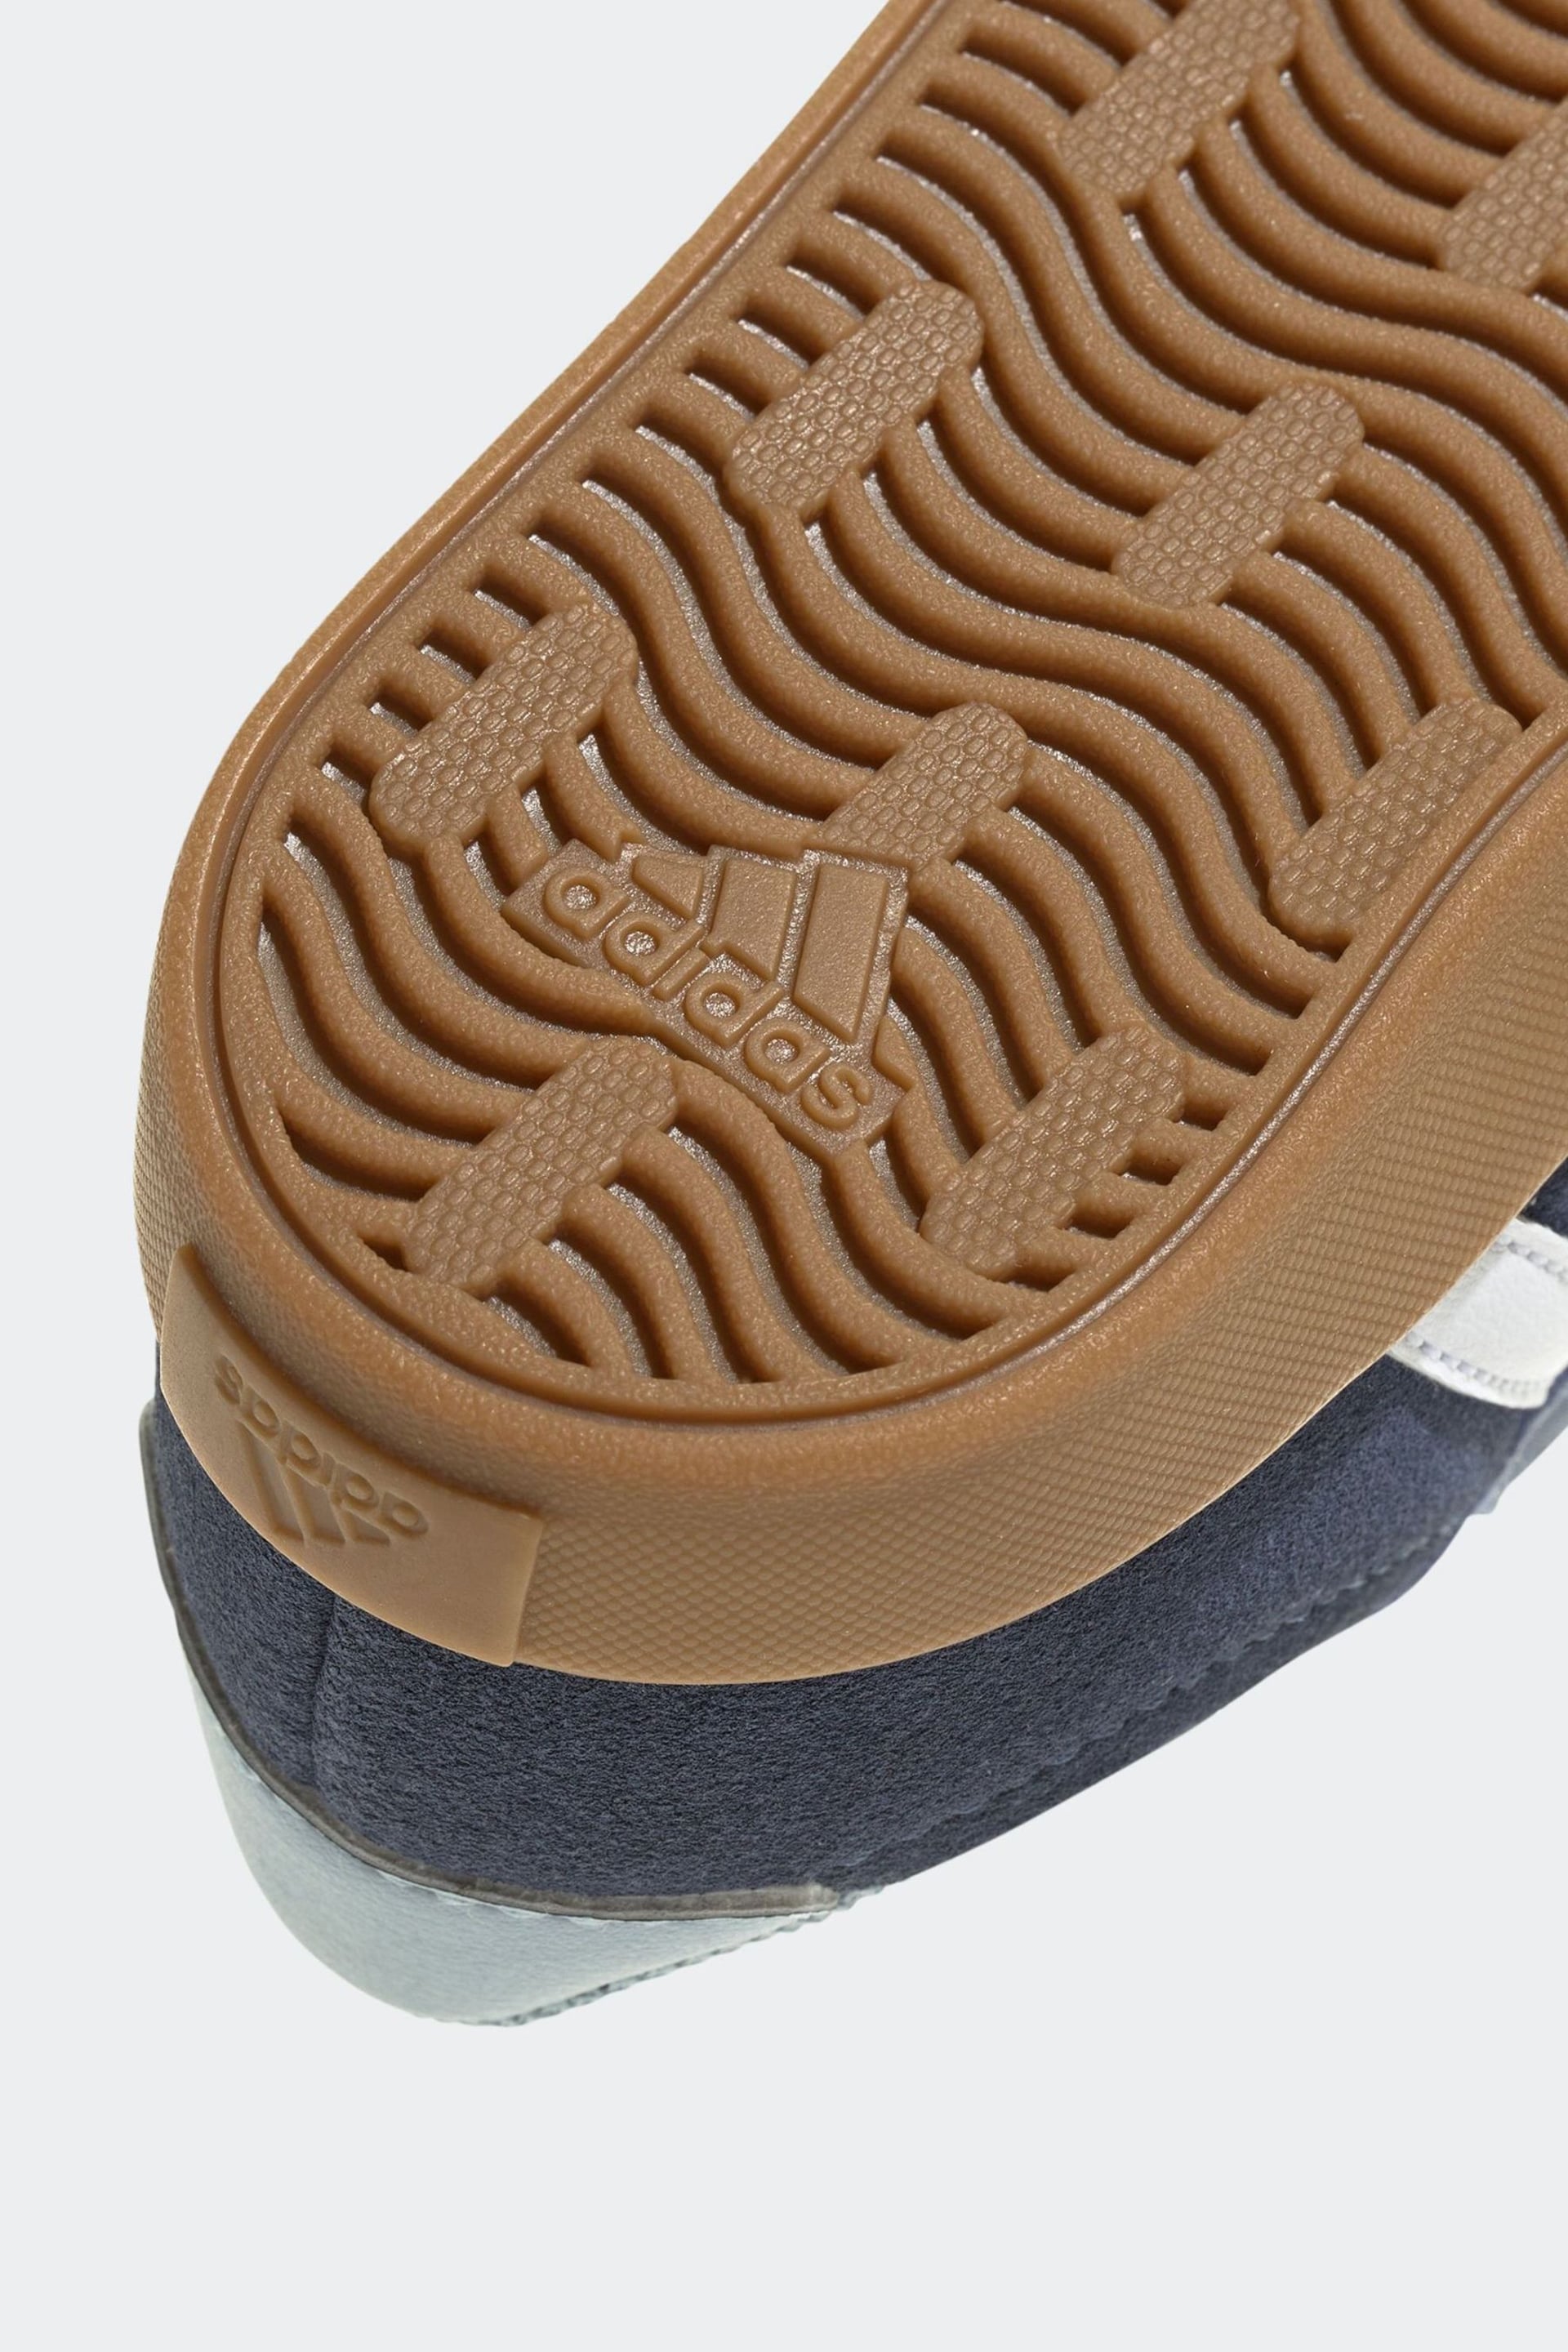 adidas Navy/White Sportswear Shoes - Image 7 of 8